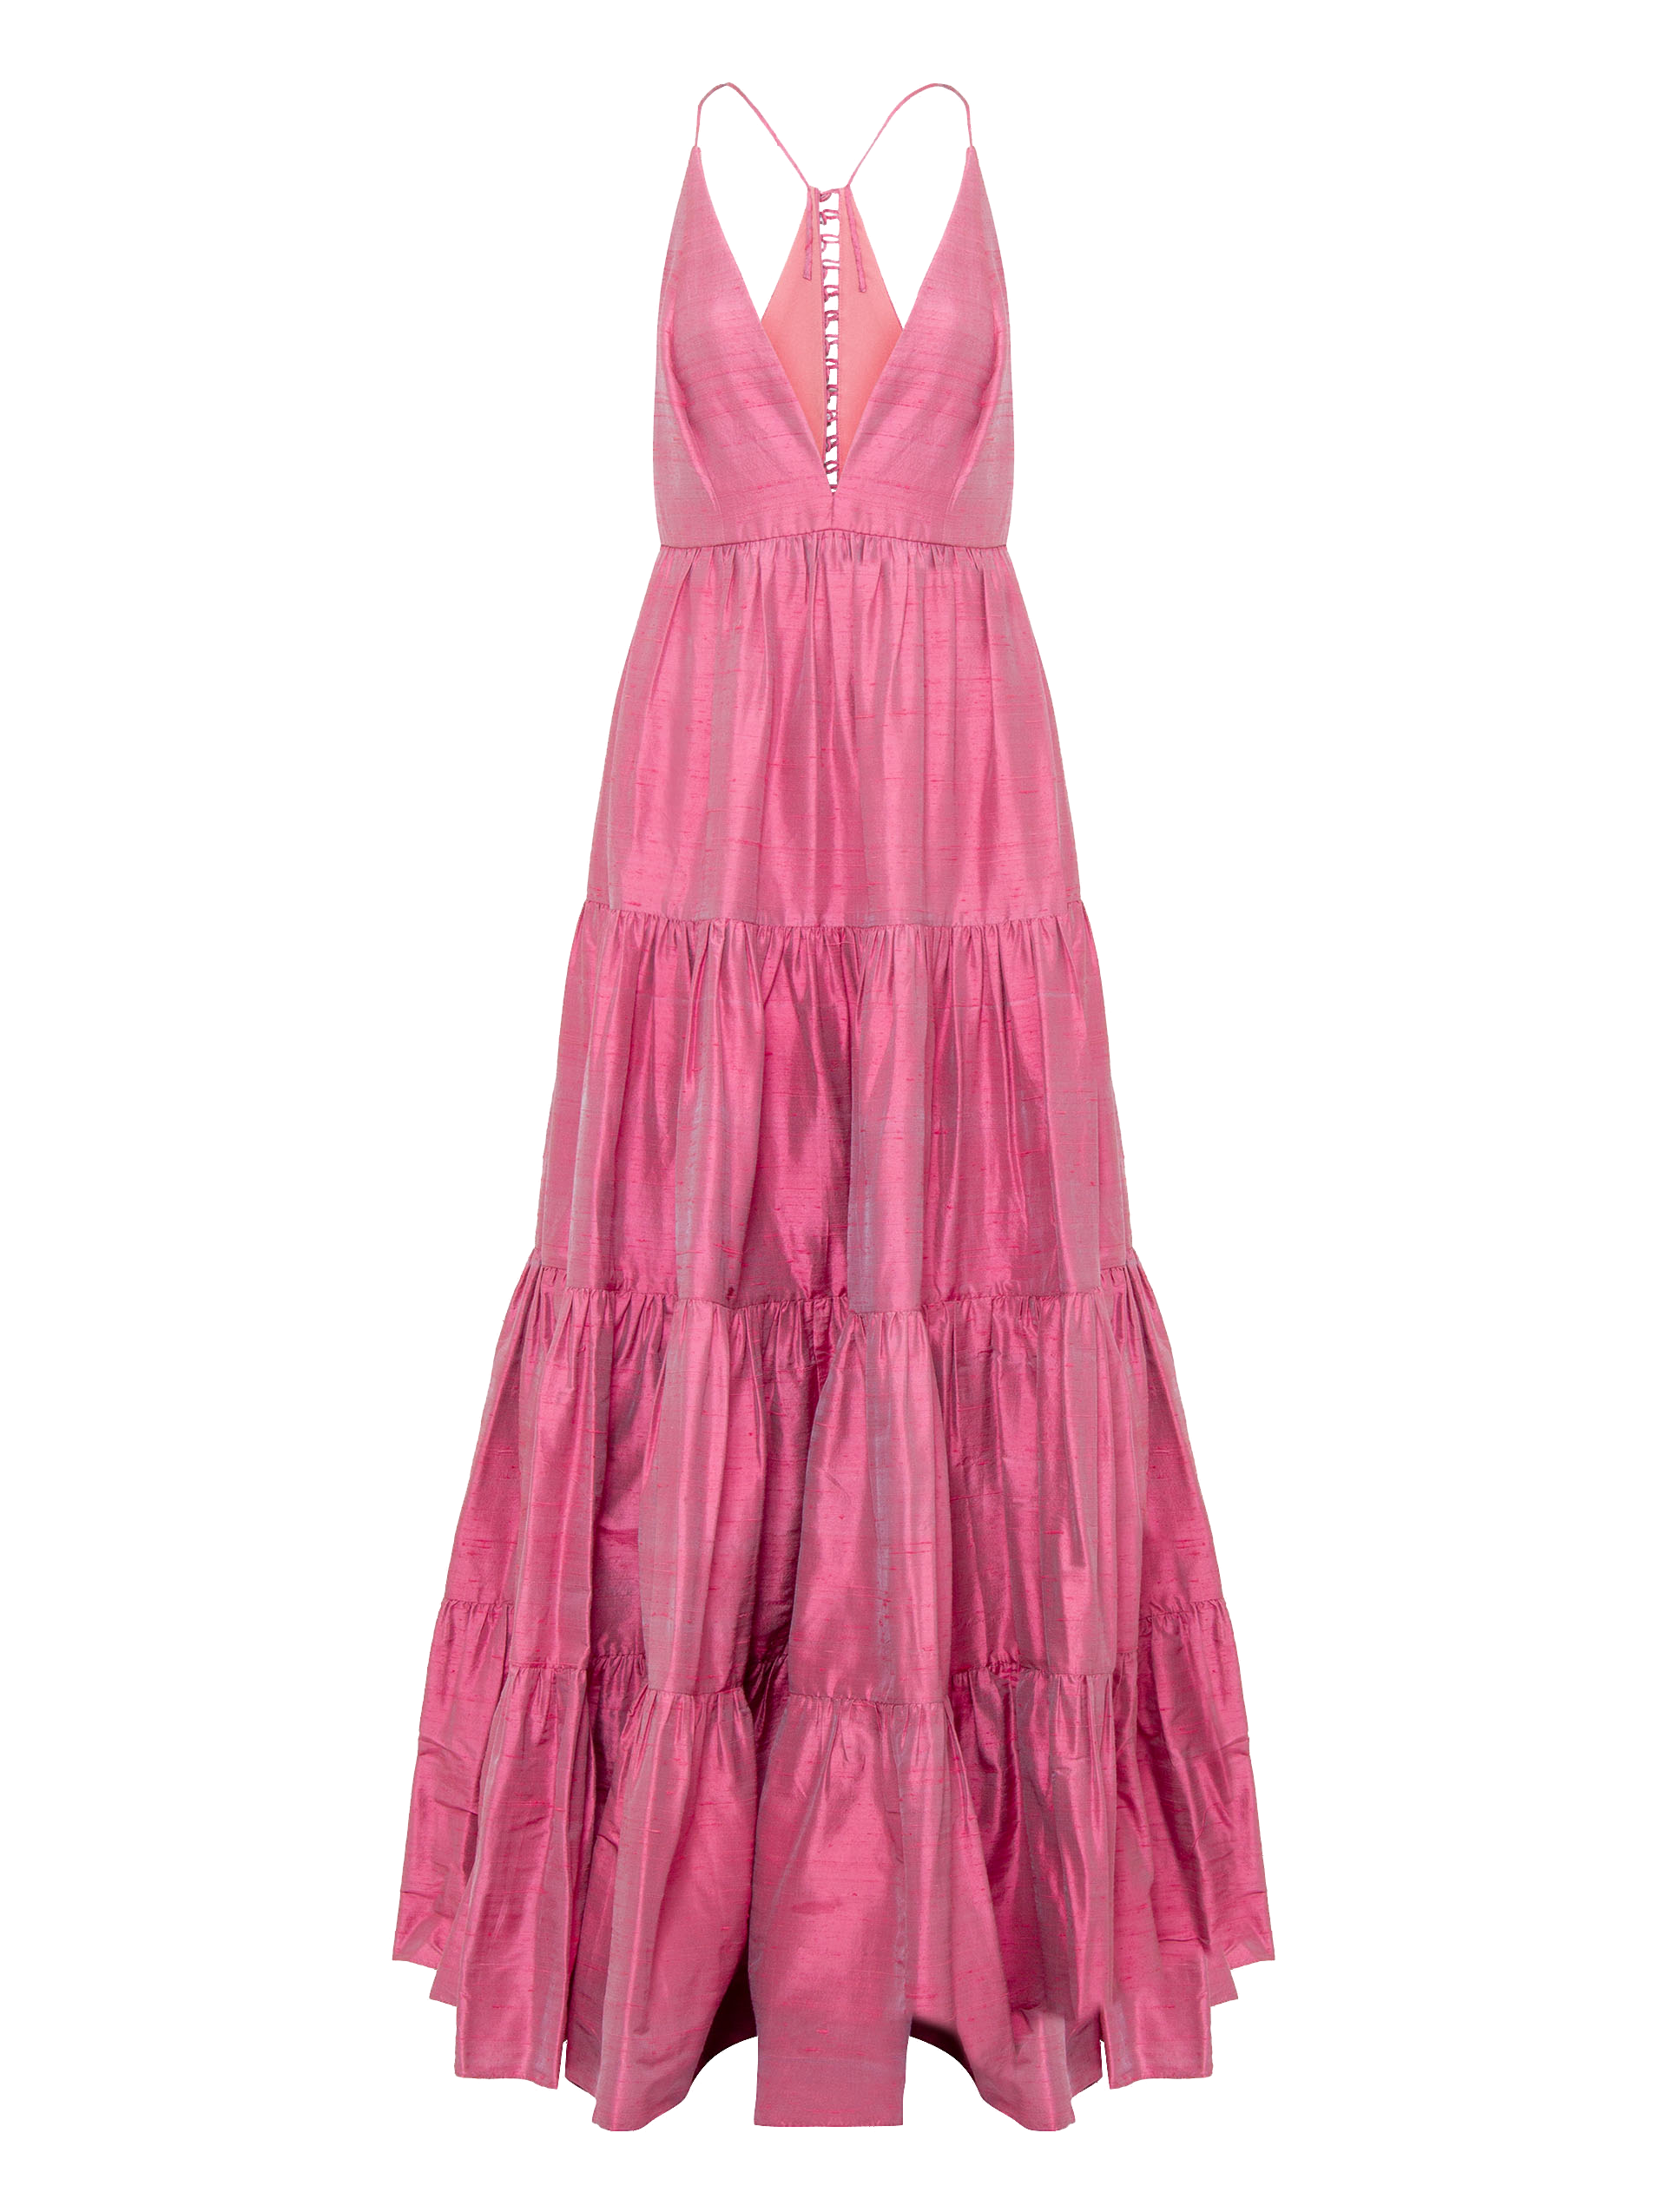 Vestido Donatella em Seda Rosa